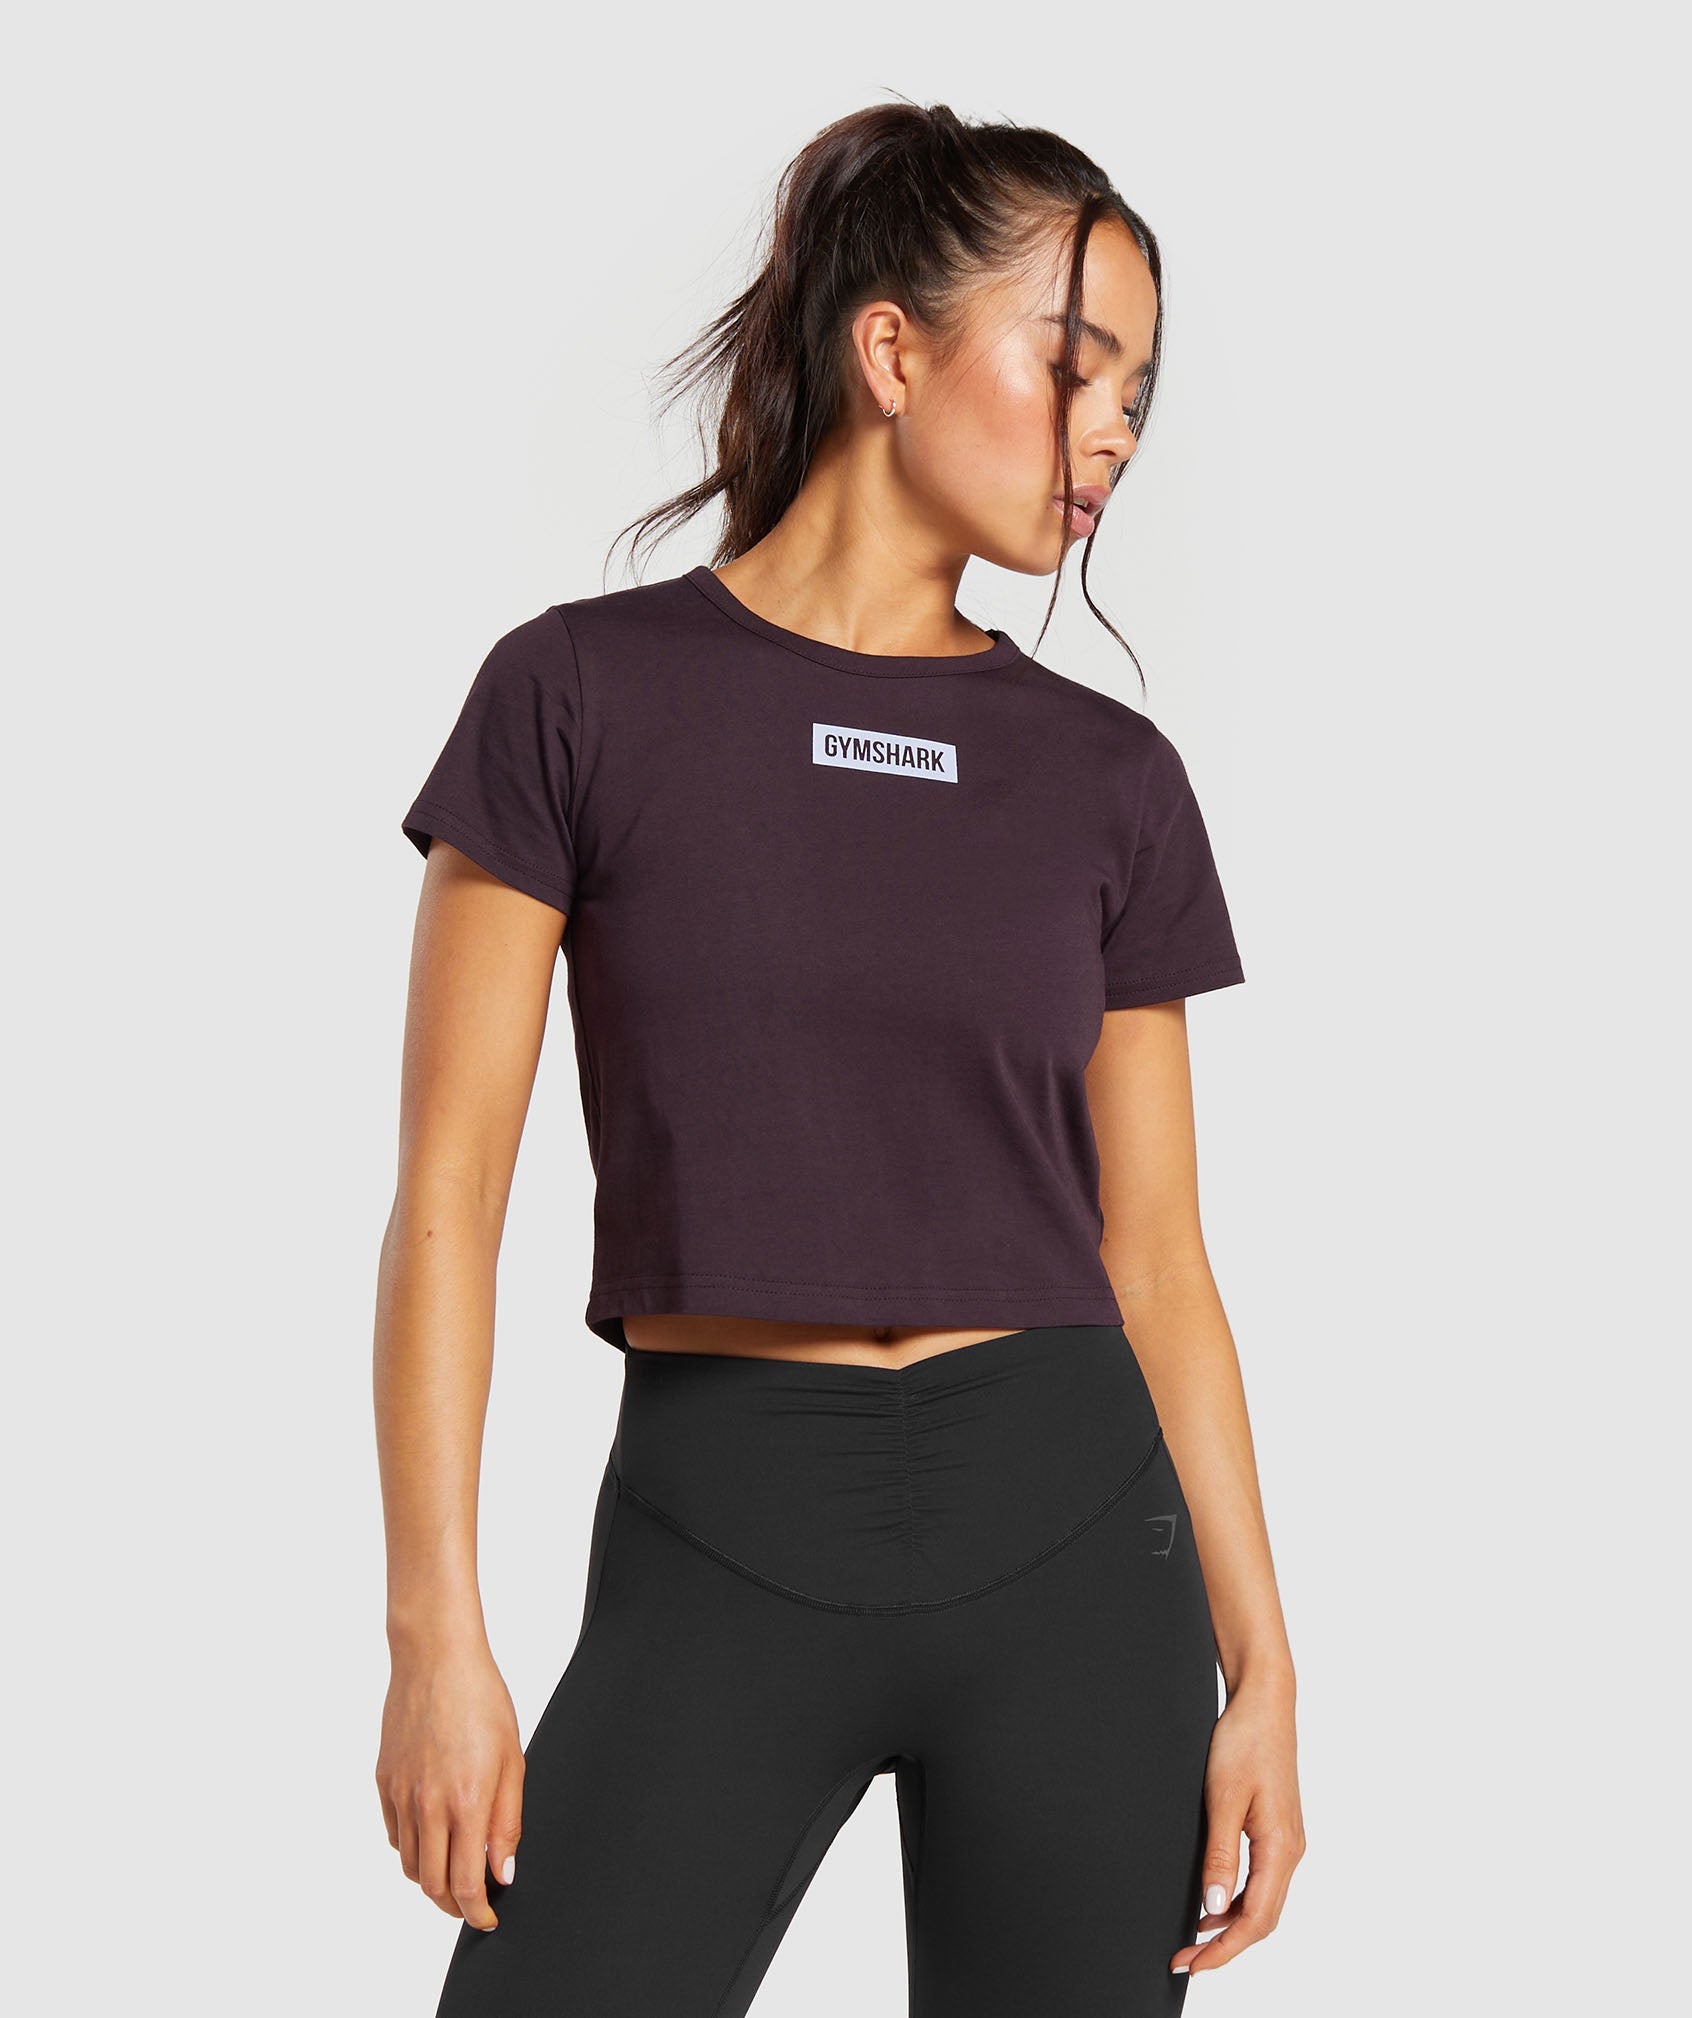 Women's Gym T Shirts, T Shirts & Tops